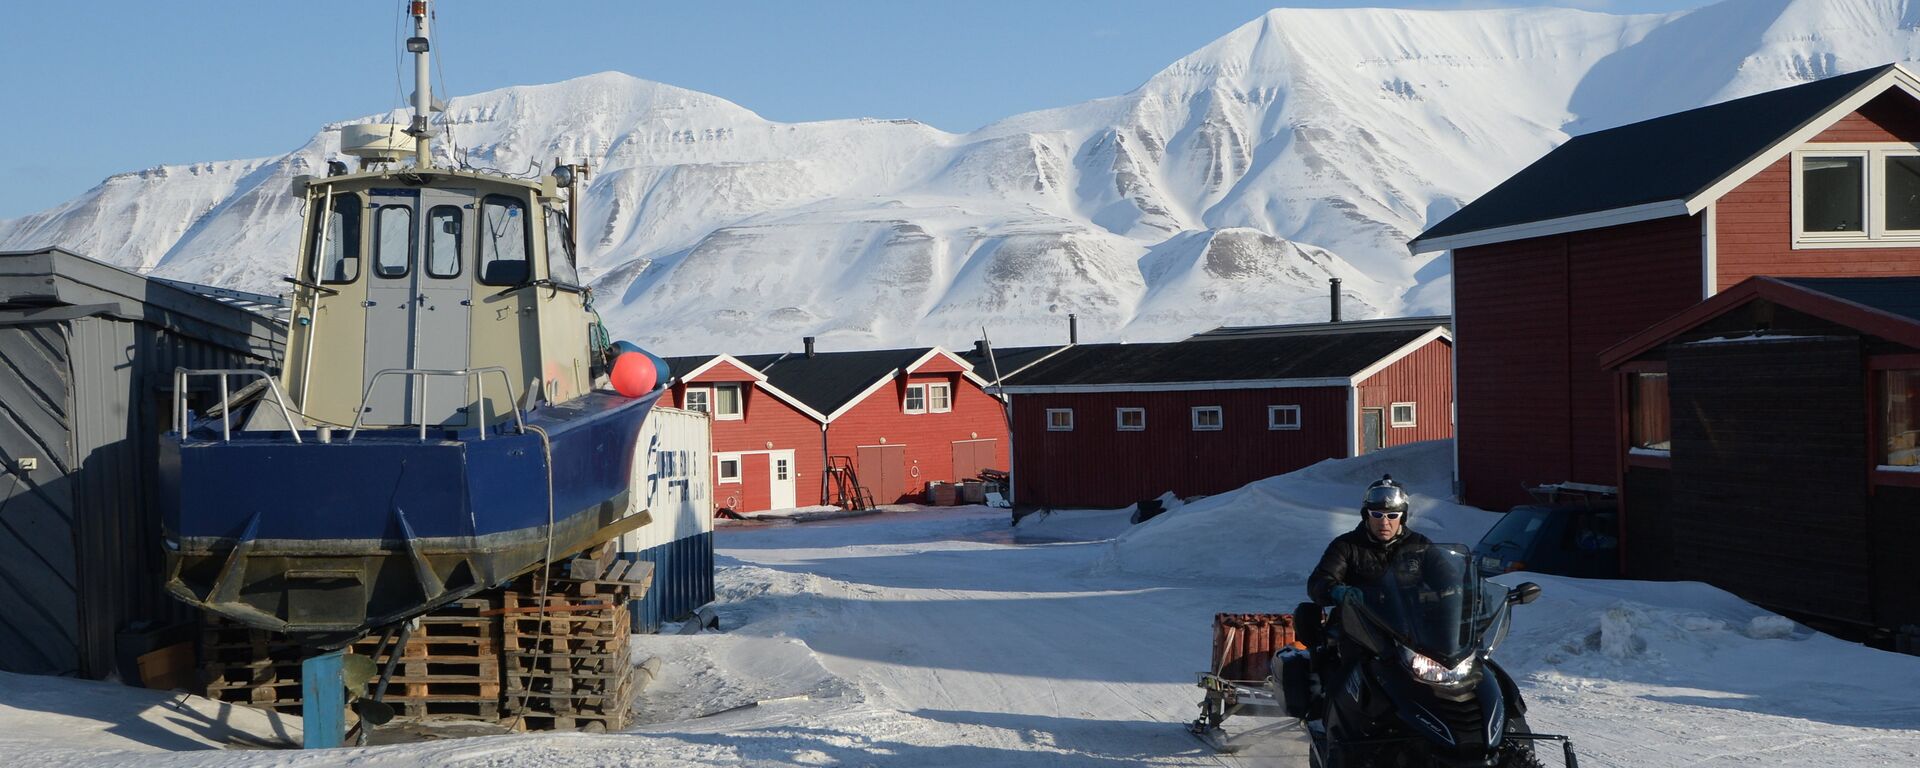 Longyearbyen, the capital of the Spitsbergen (Svalbard) Archipelago - Sputnik International, 1920, 12.11.2021